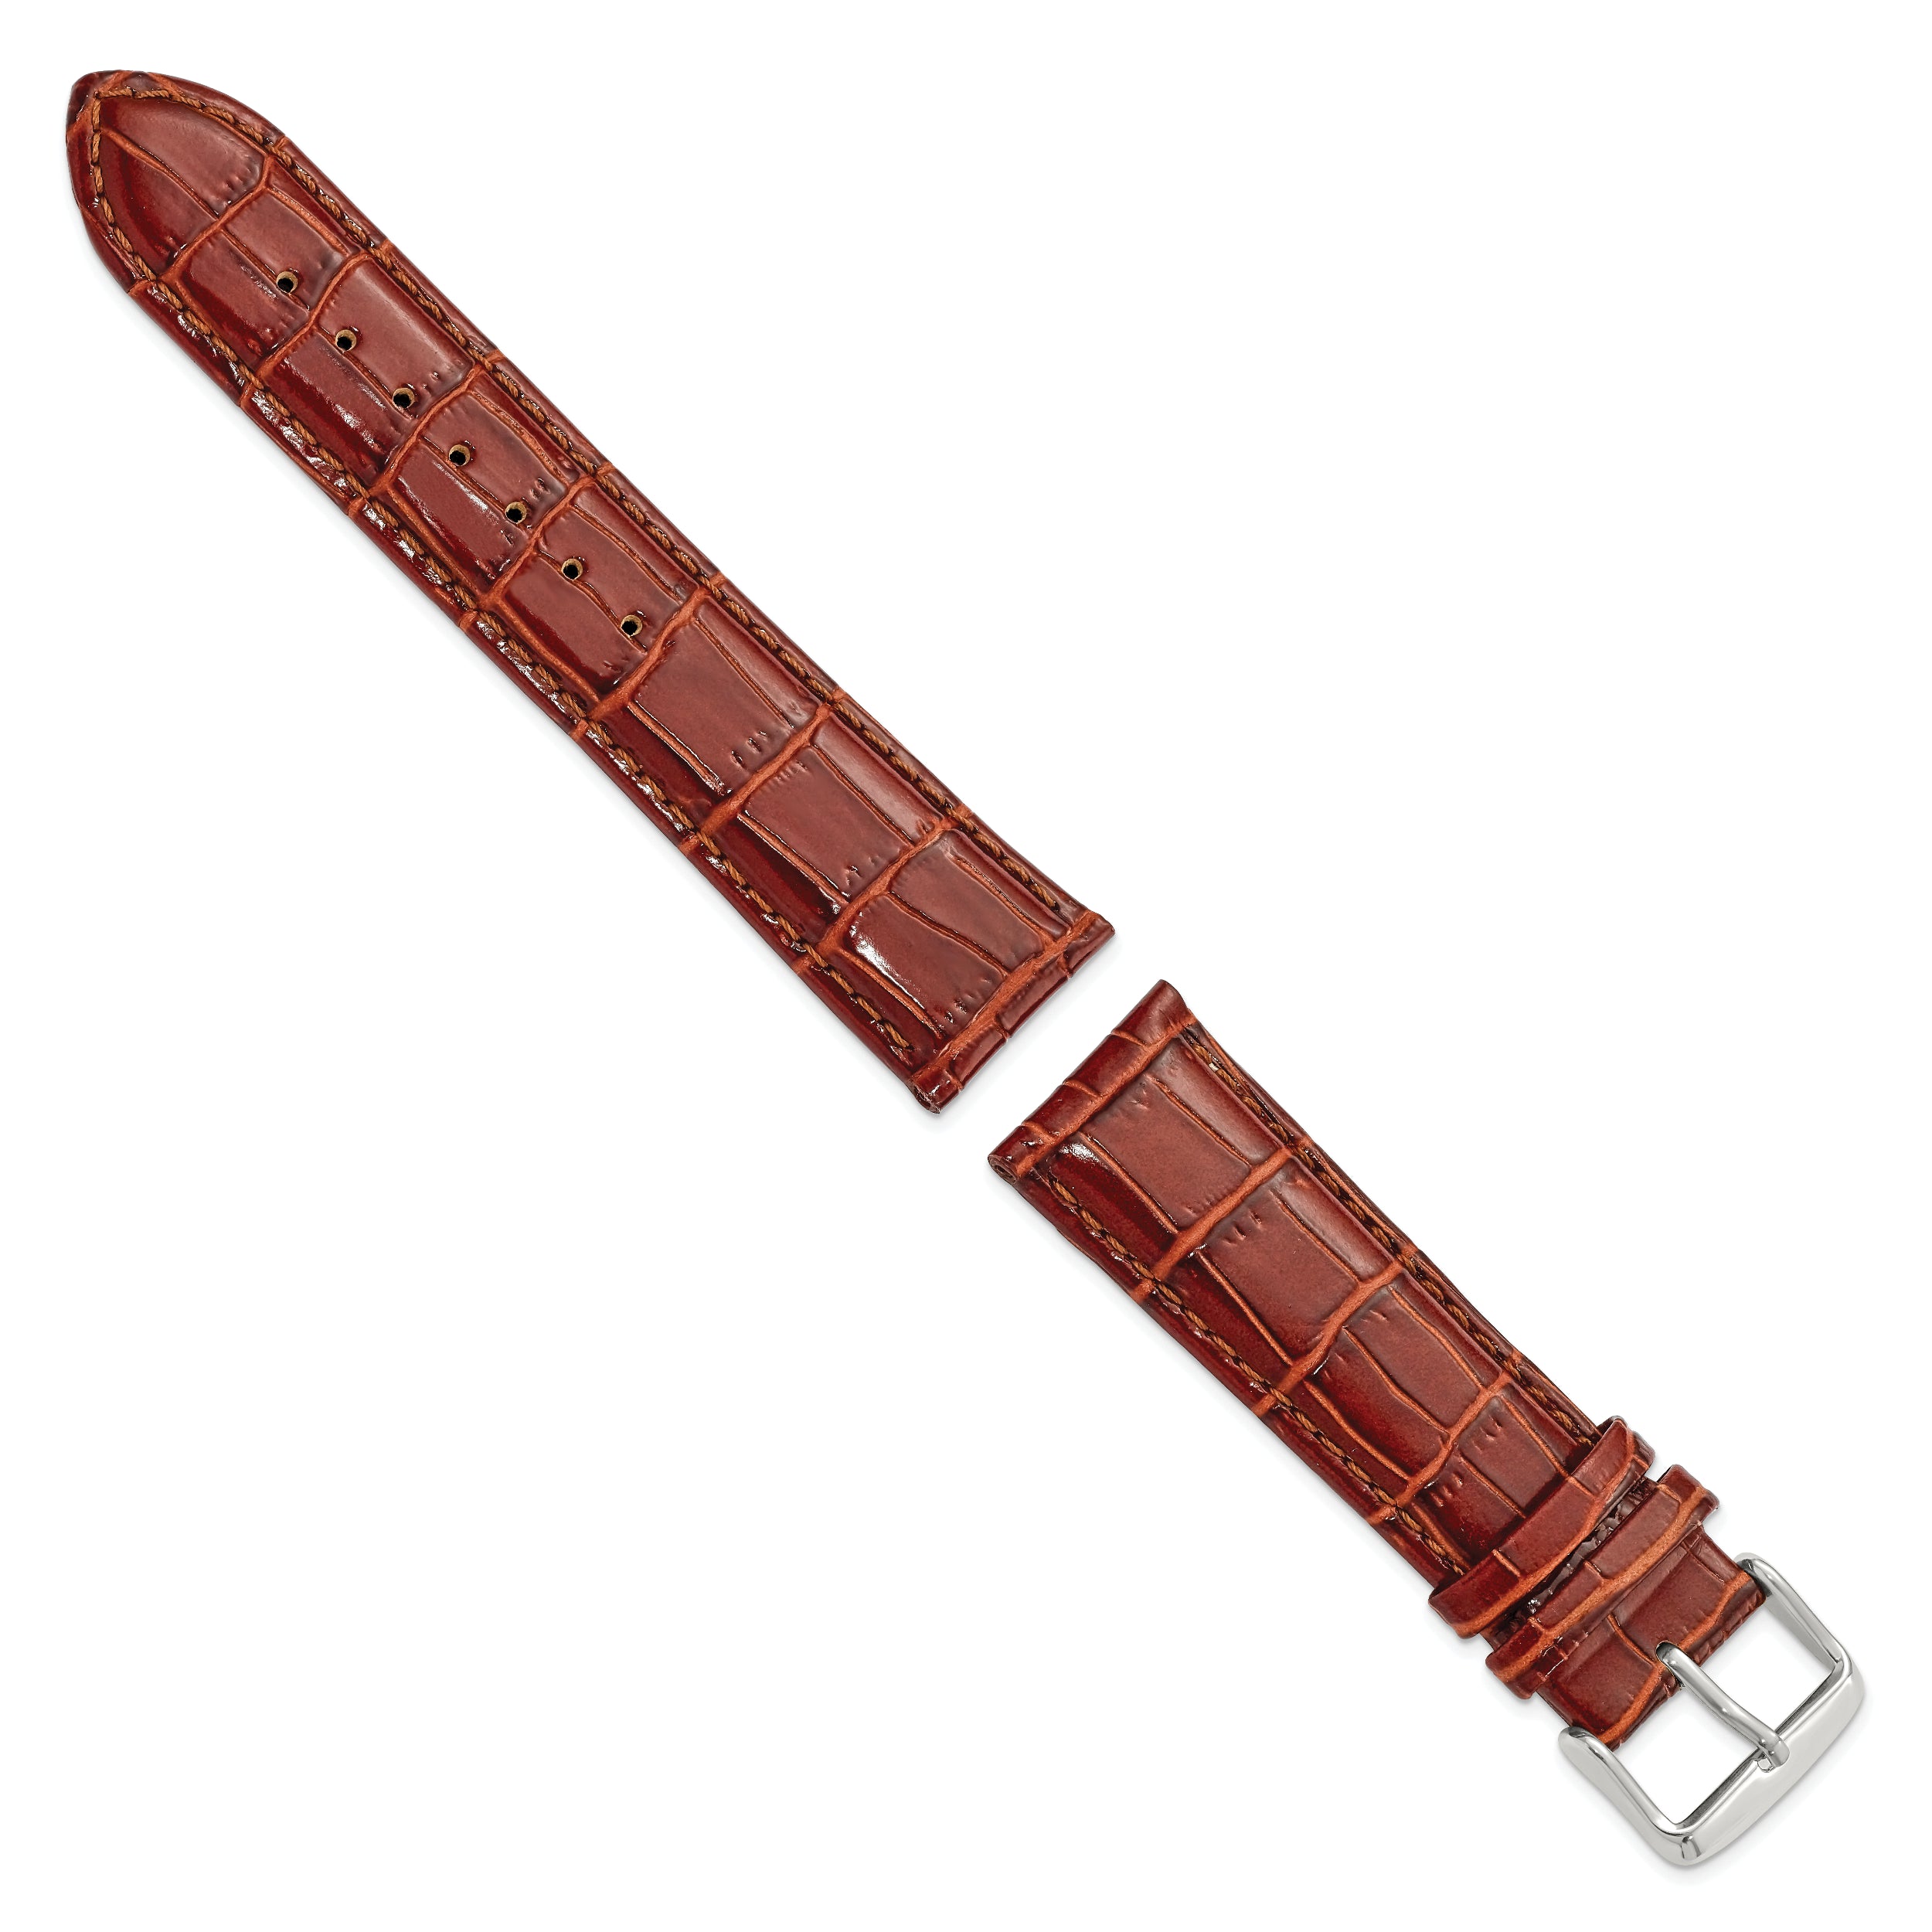 12mm Havana Crocodile Grain Chronograph Leather with Silver-tone Buckle 6.75 inch Watch Band